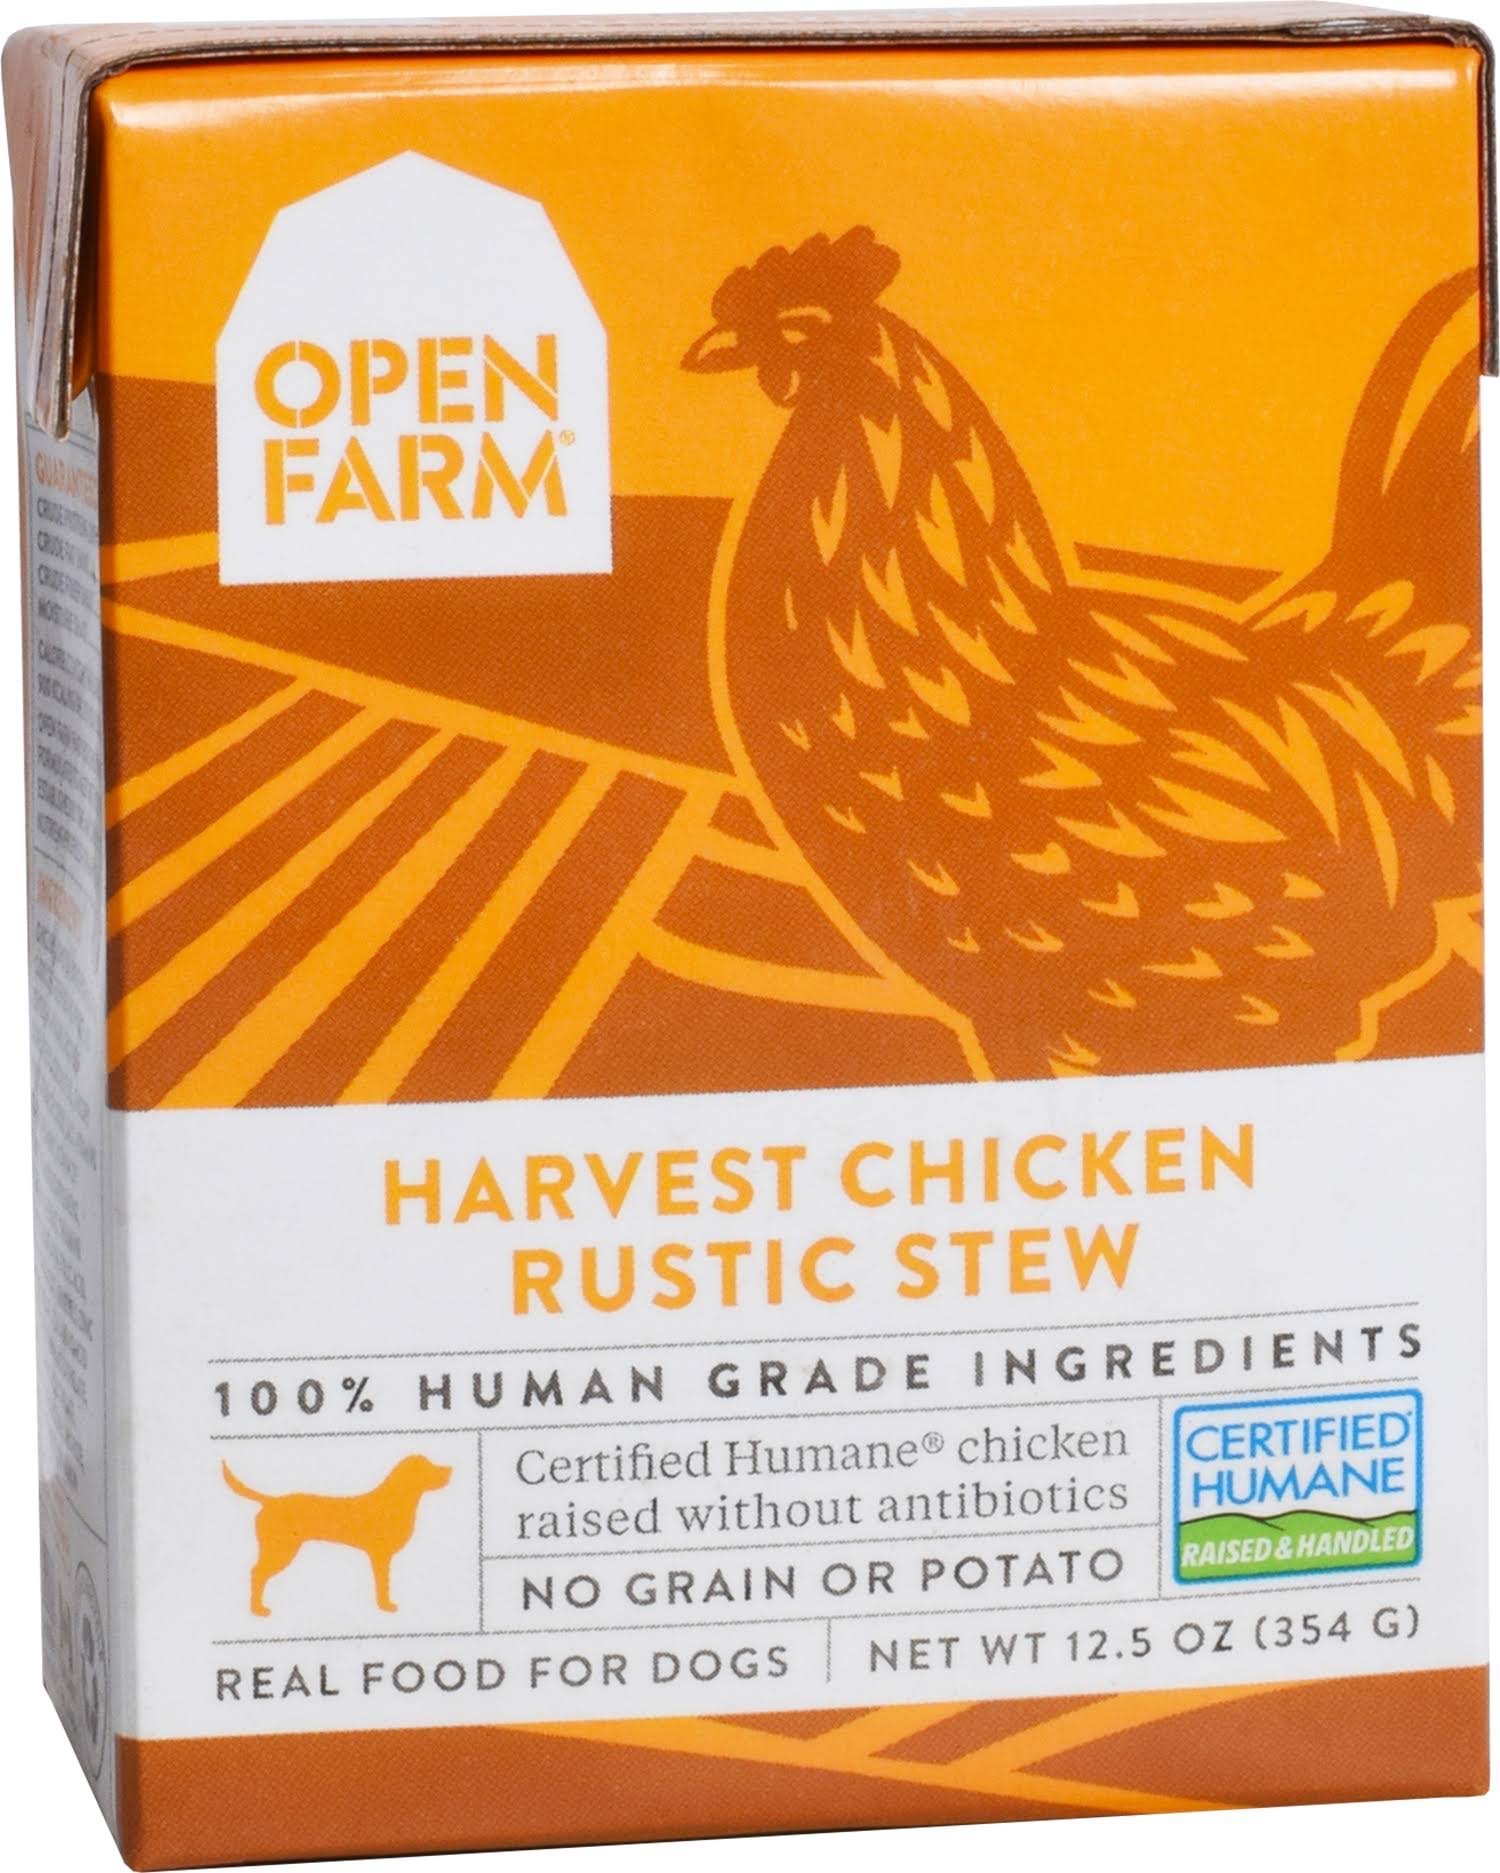 Open Farm Rustic Stew Harvest Chicken Dog Food 12.5 oz